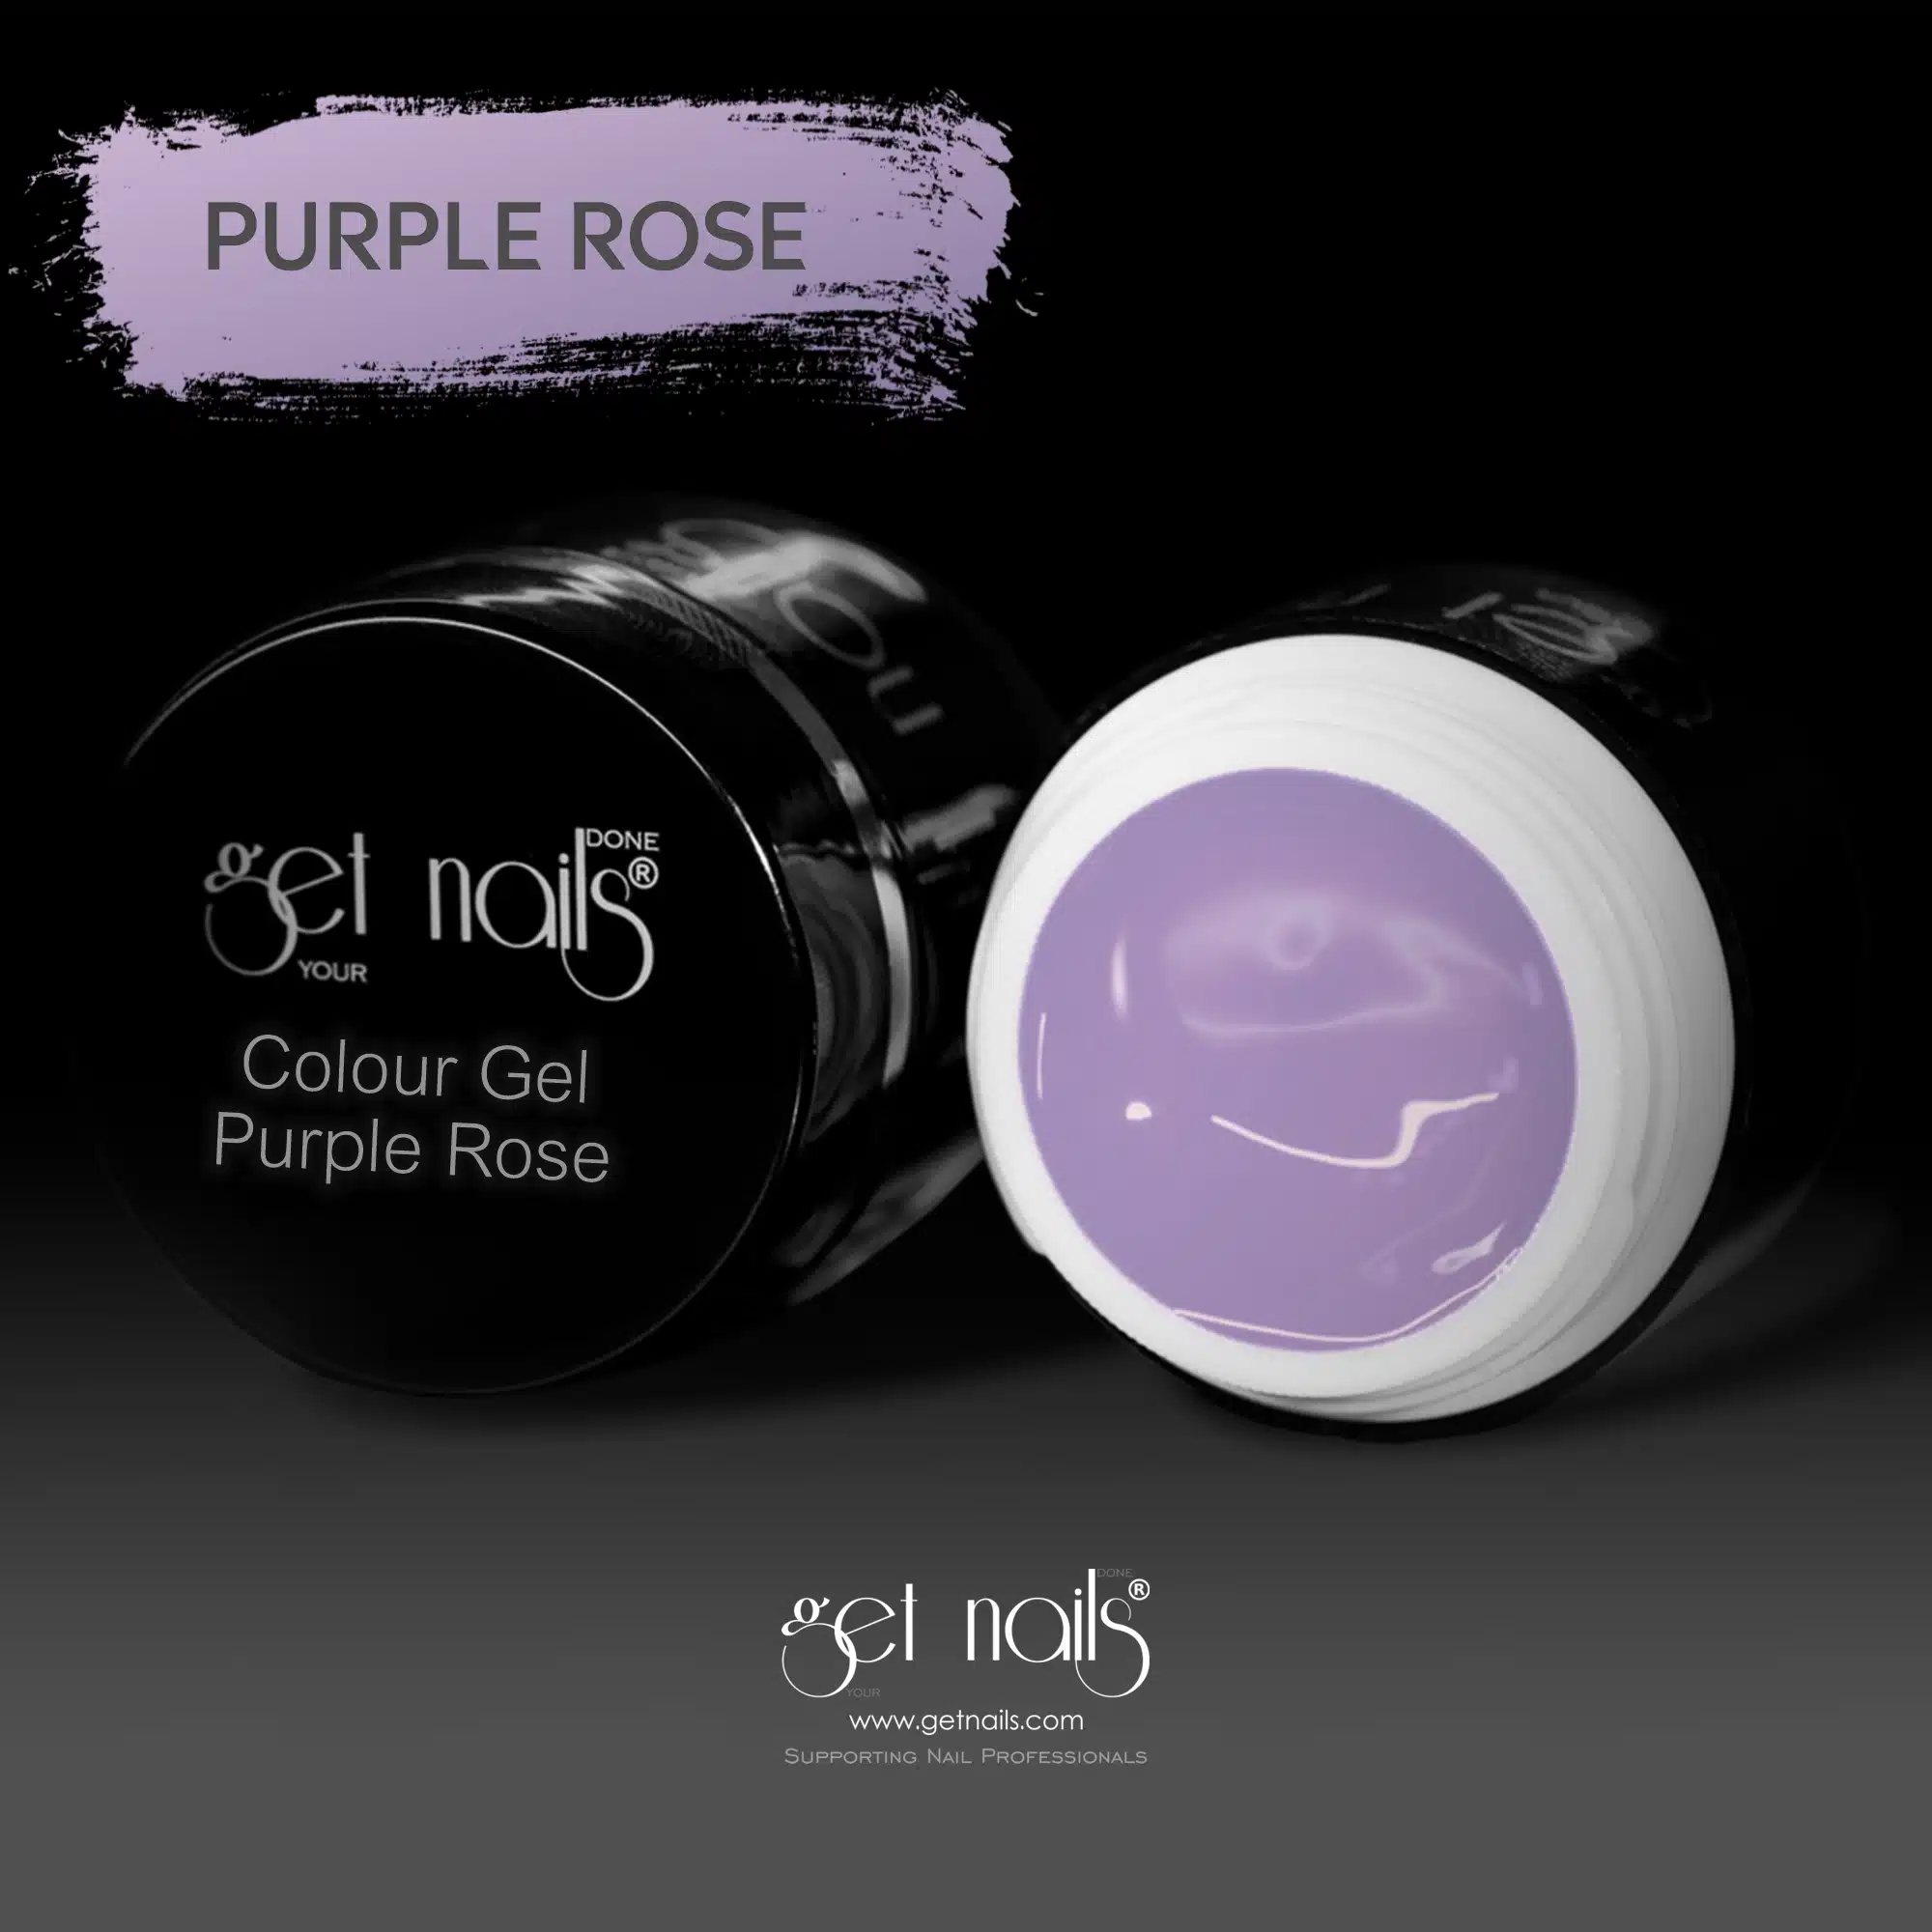 Get Nails Austria - Color Gel Purple Rose 5g